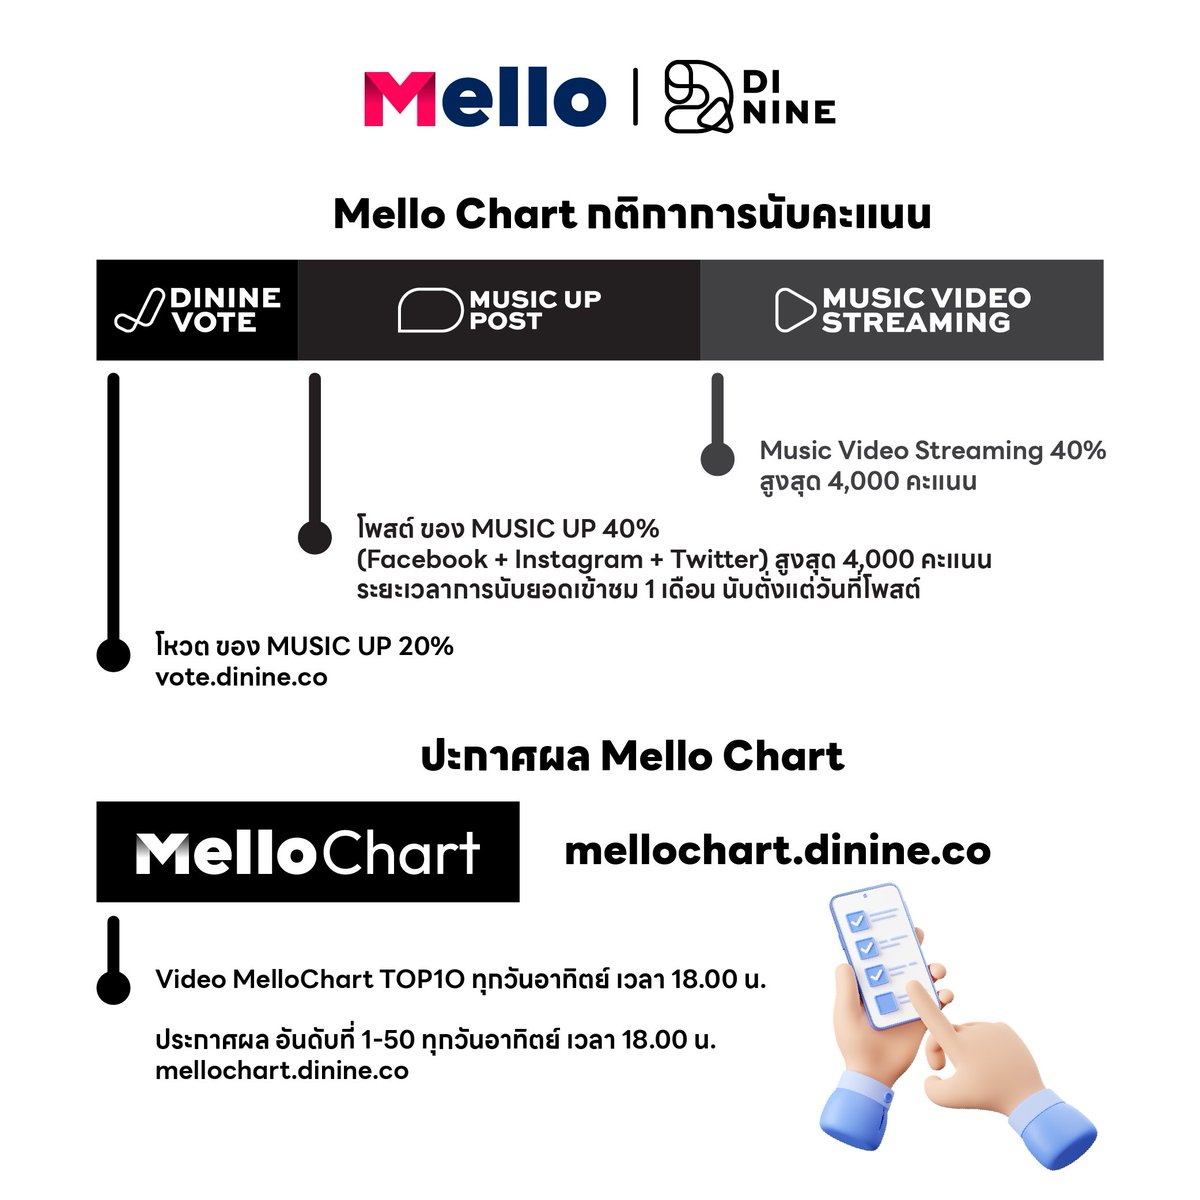 Mello Chart เปลี่ยนวันและเวลาประกาศผล
เป็น ทุกวัน อาทิตย์ เวลา 6PM (UTC+7) [18.00น.]

VOTE NOW : vote.dinine.co

*สามารถดูคะแนนของสัปดาห์ก่อนหน้า
ได้ทาง : mellochart.dinine.co

#MusicUp #MelloTPOP #MelloChart #DININE